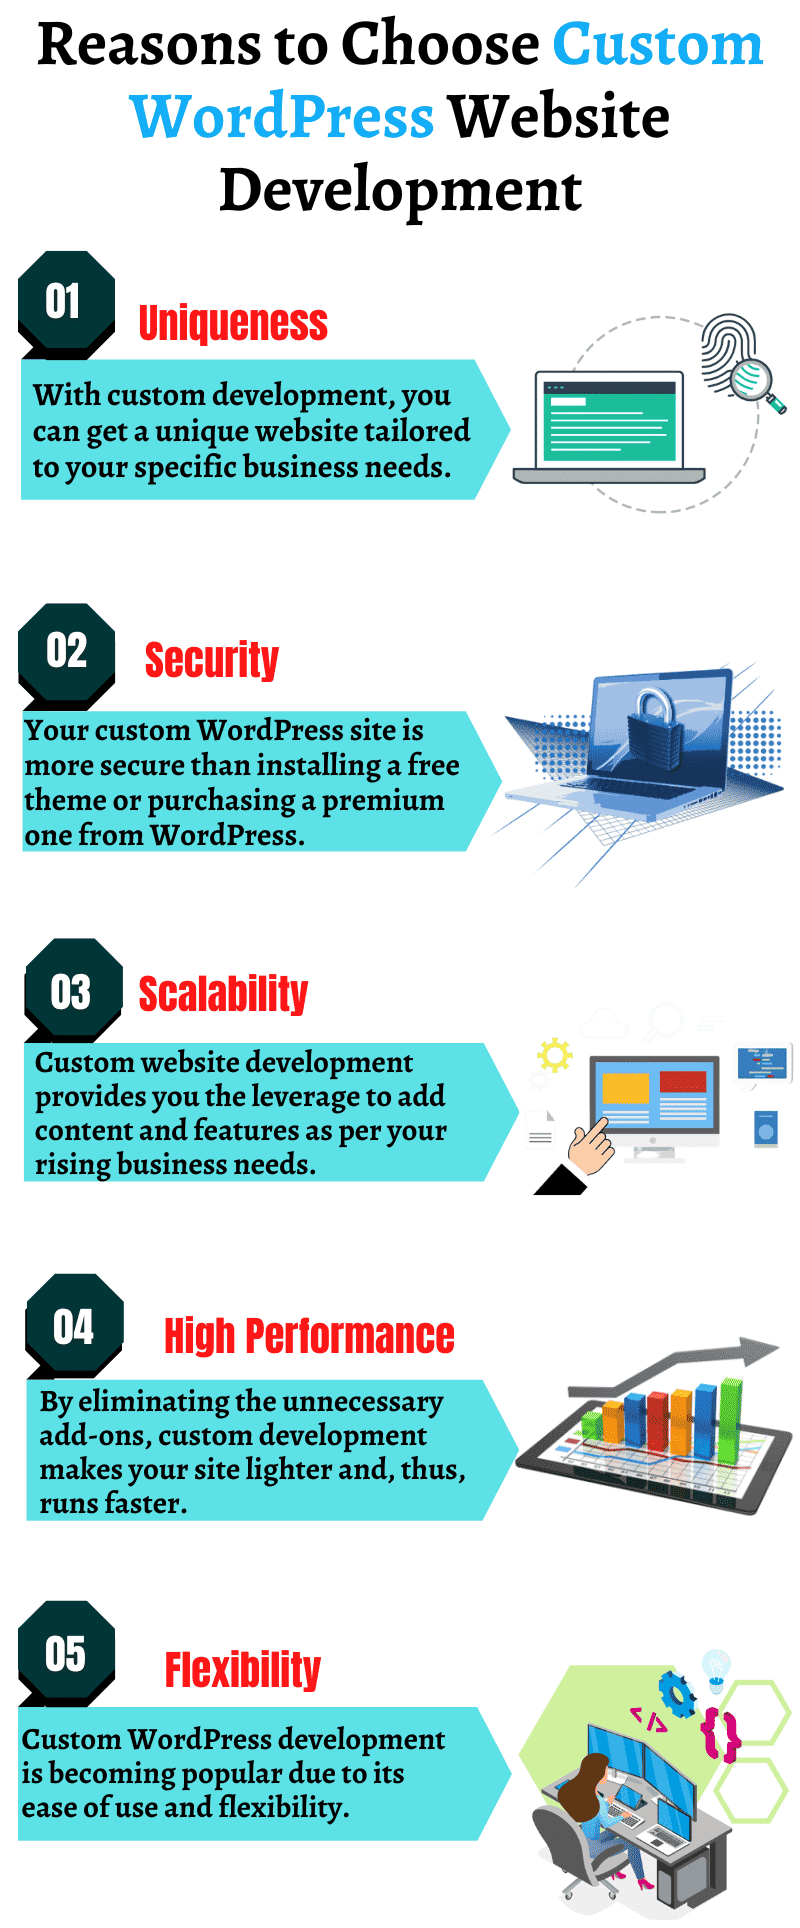 Reasons to Choose Custom WordPress Website Development for Your Business